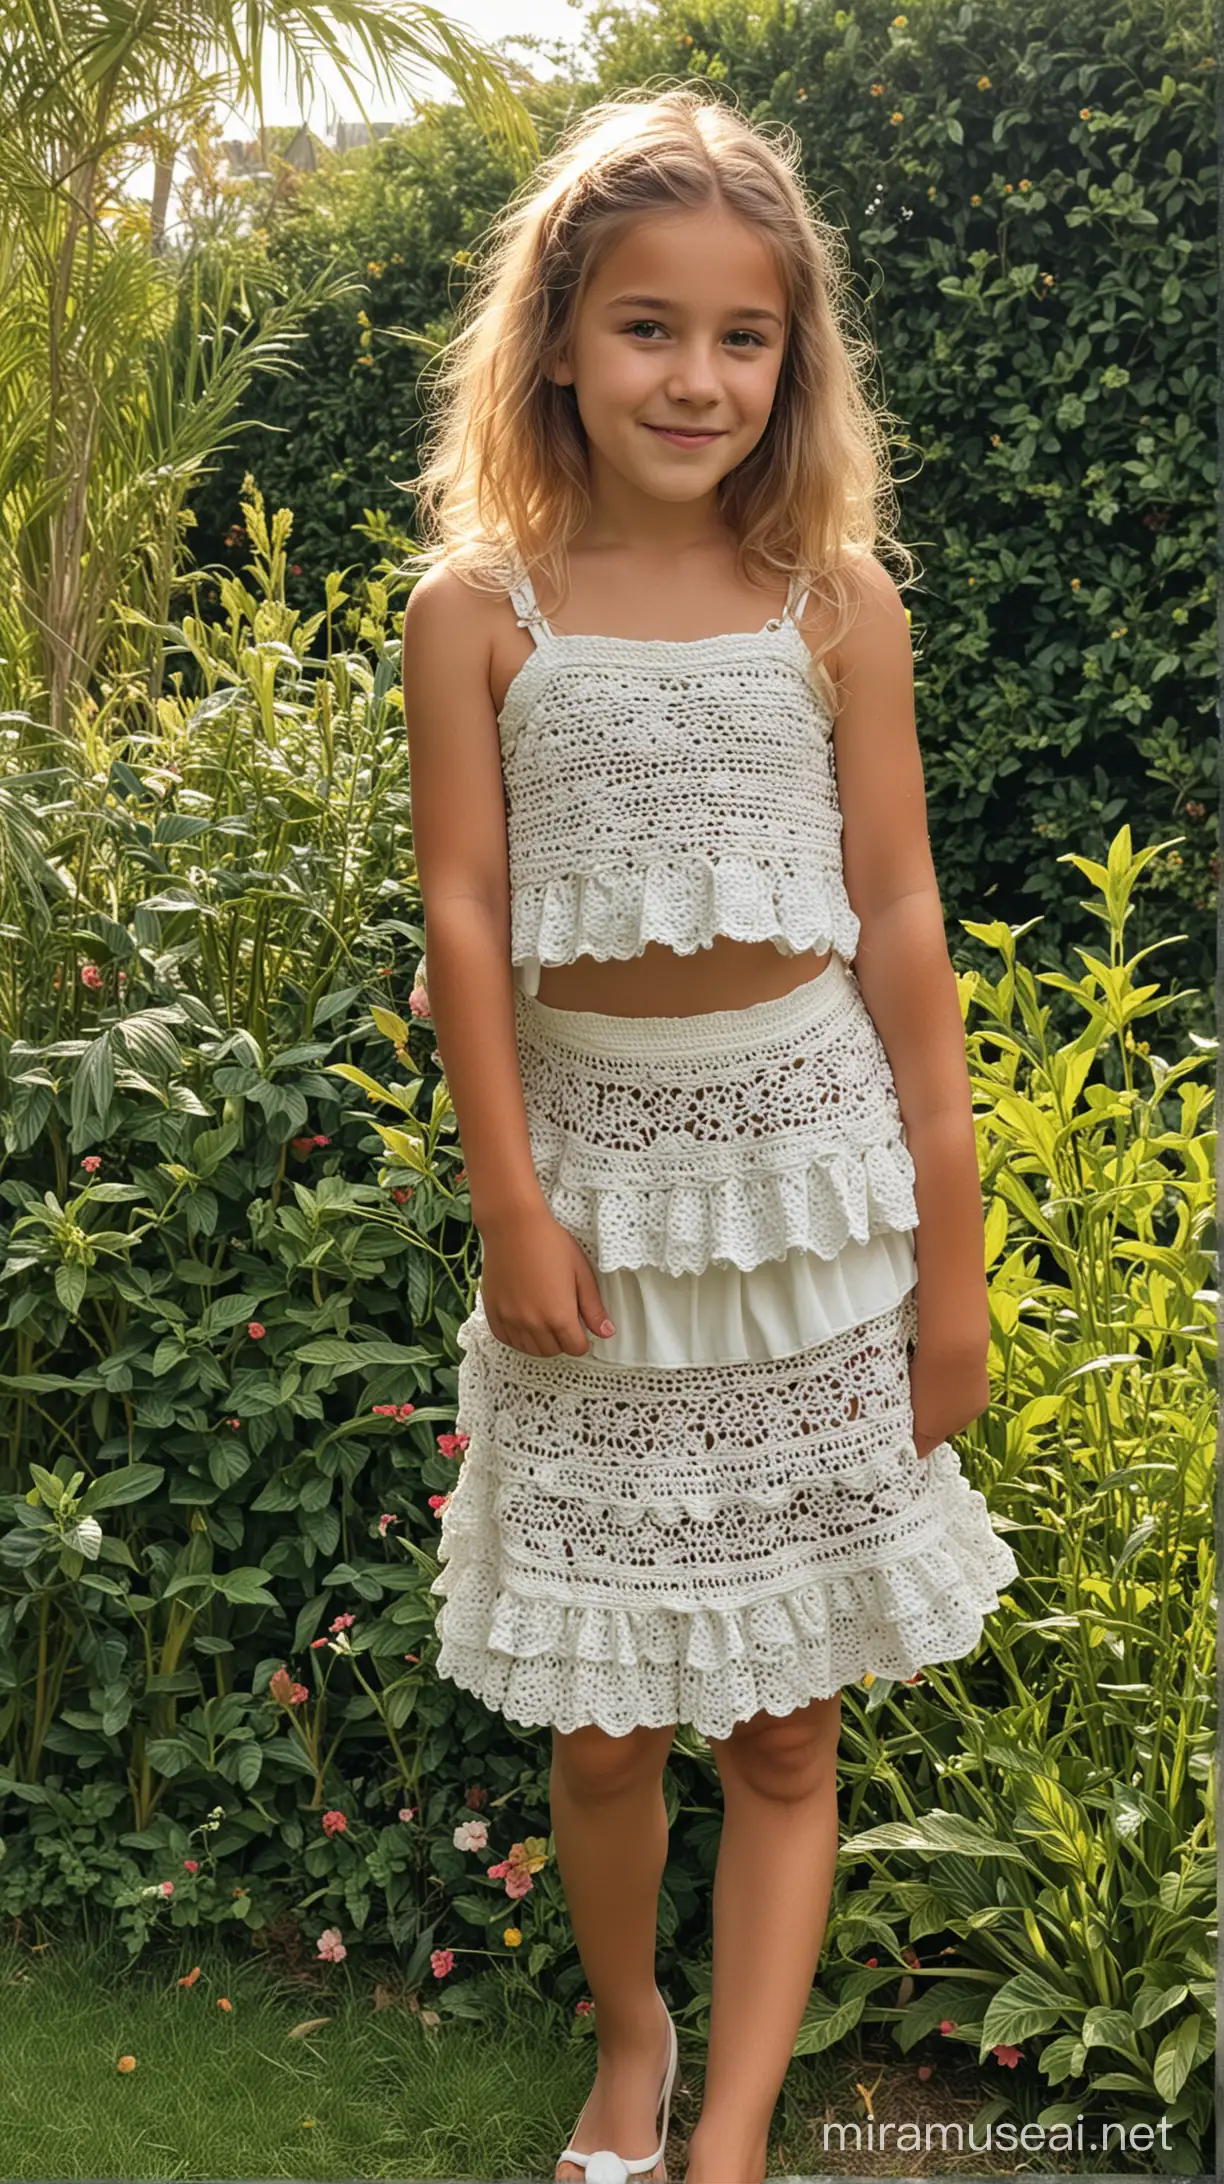 Young Girl in Crochet Crop Top and Tiered Mini Skirt Exploring Garden